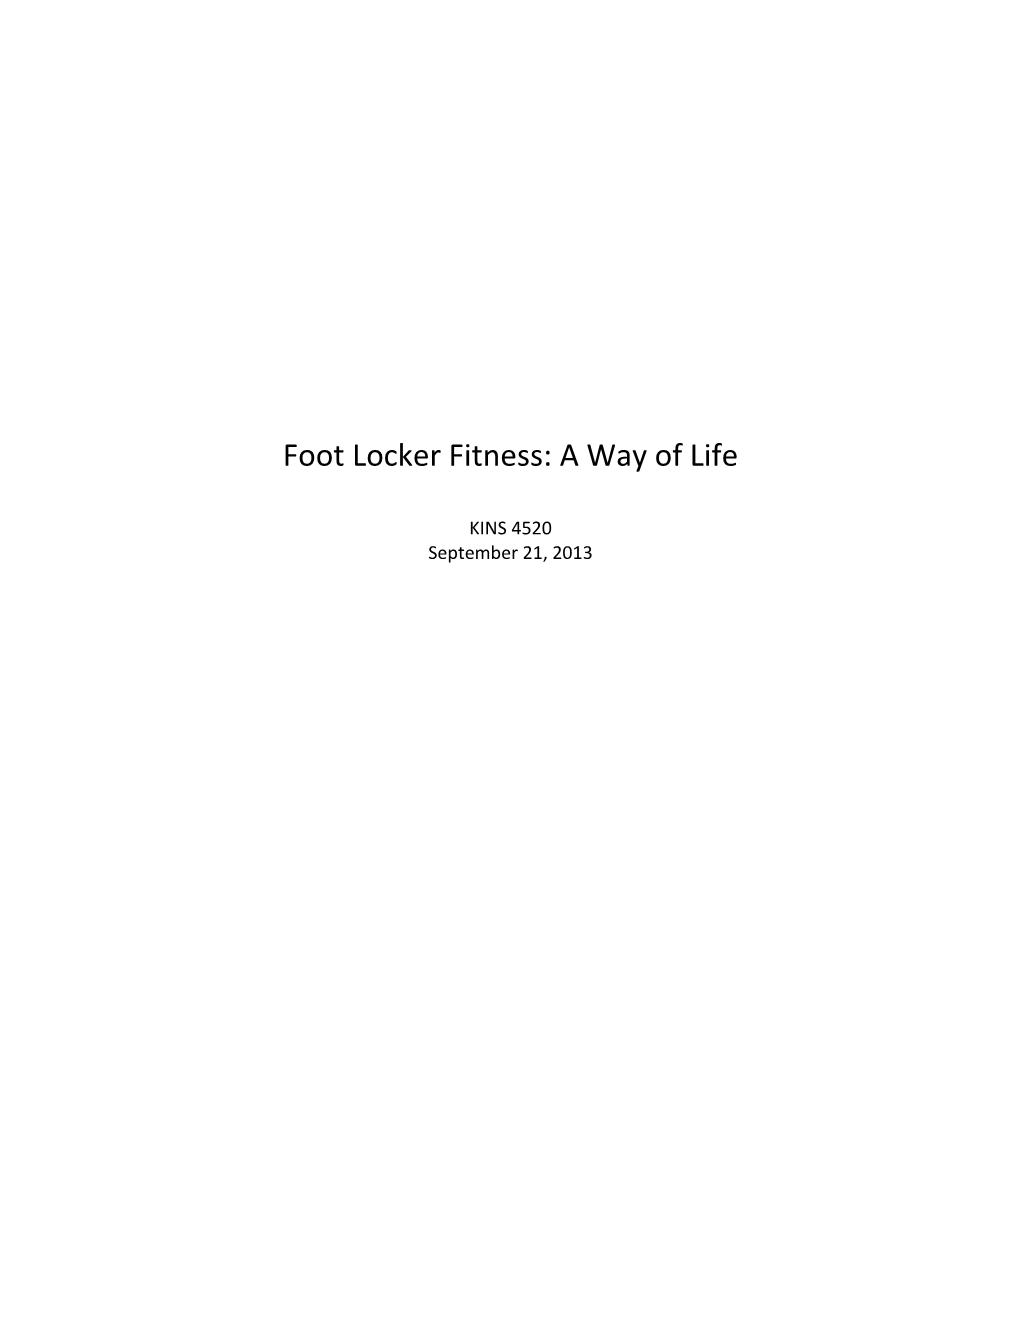 Foot Locker Fitness: a Way of Life